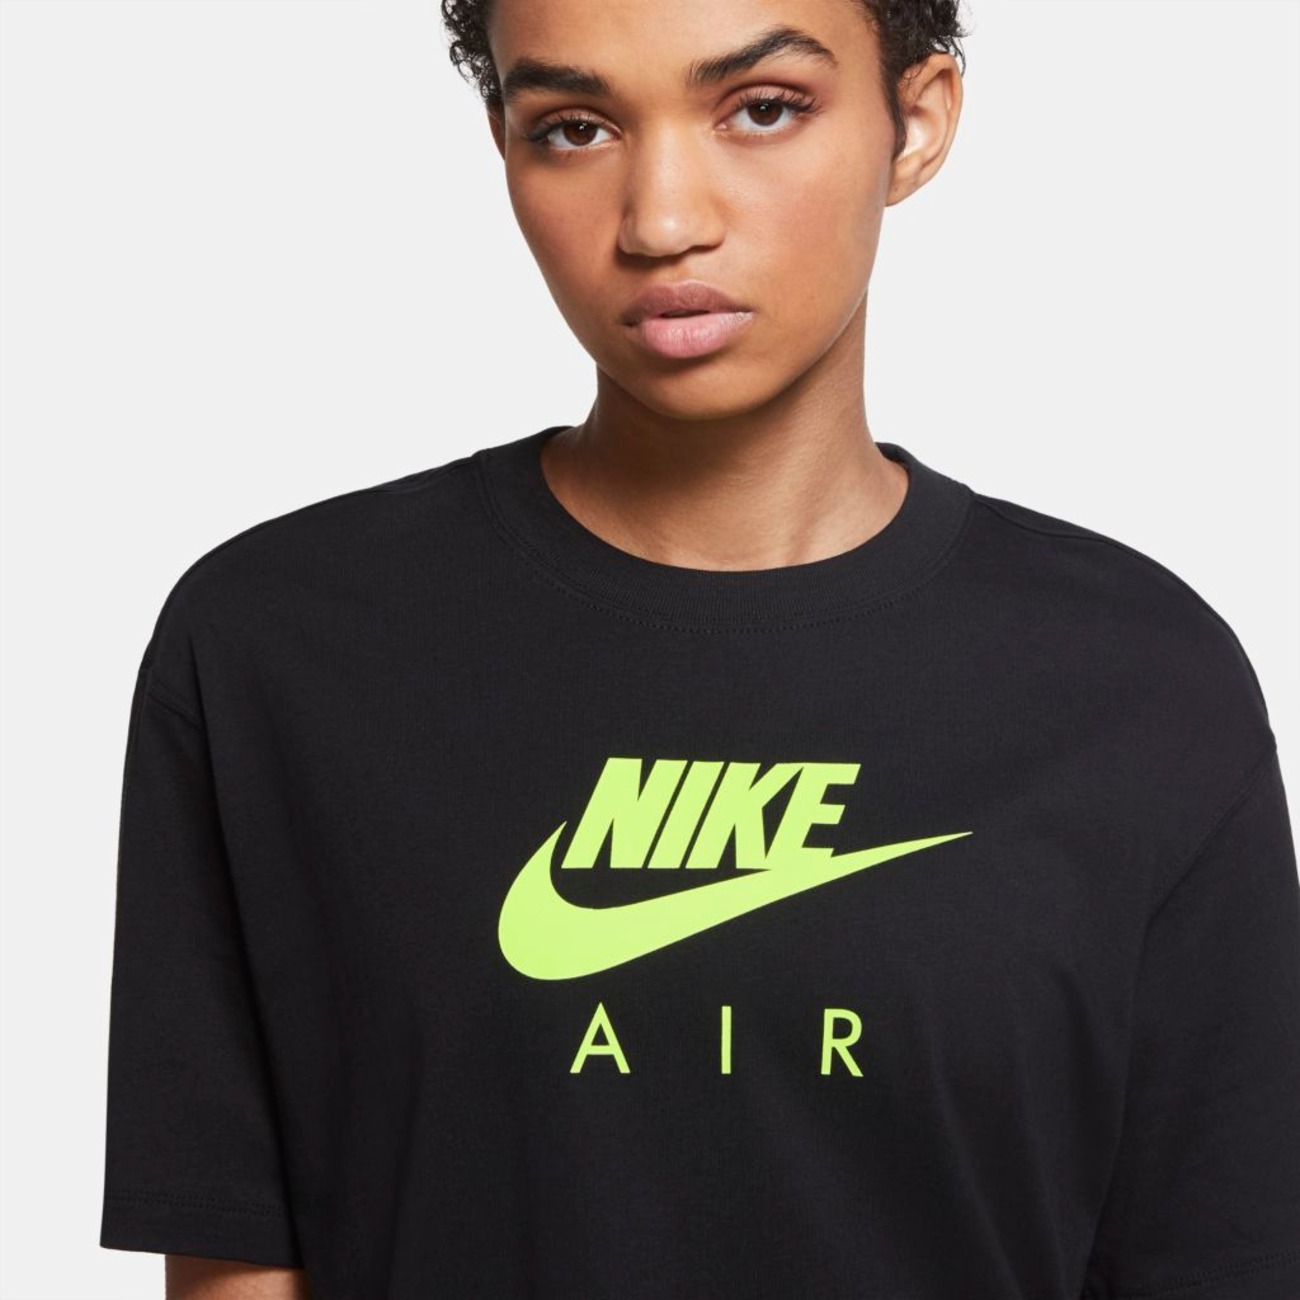 Camiseta Nike Air Feminina - Foto 3